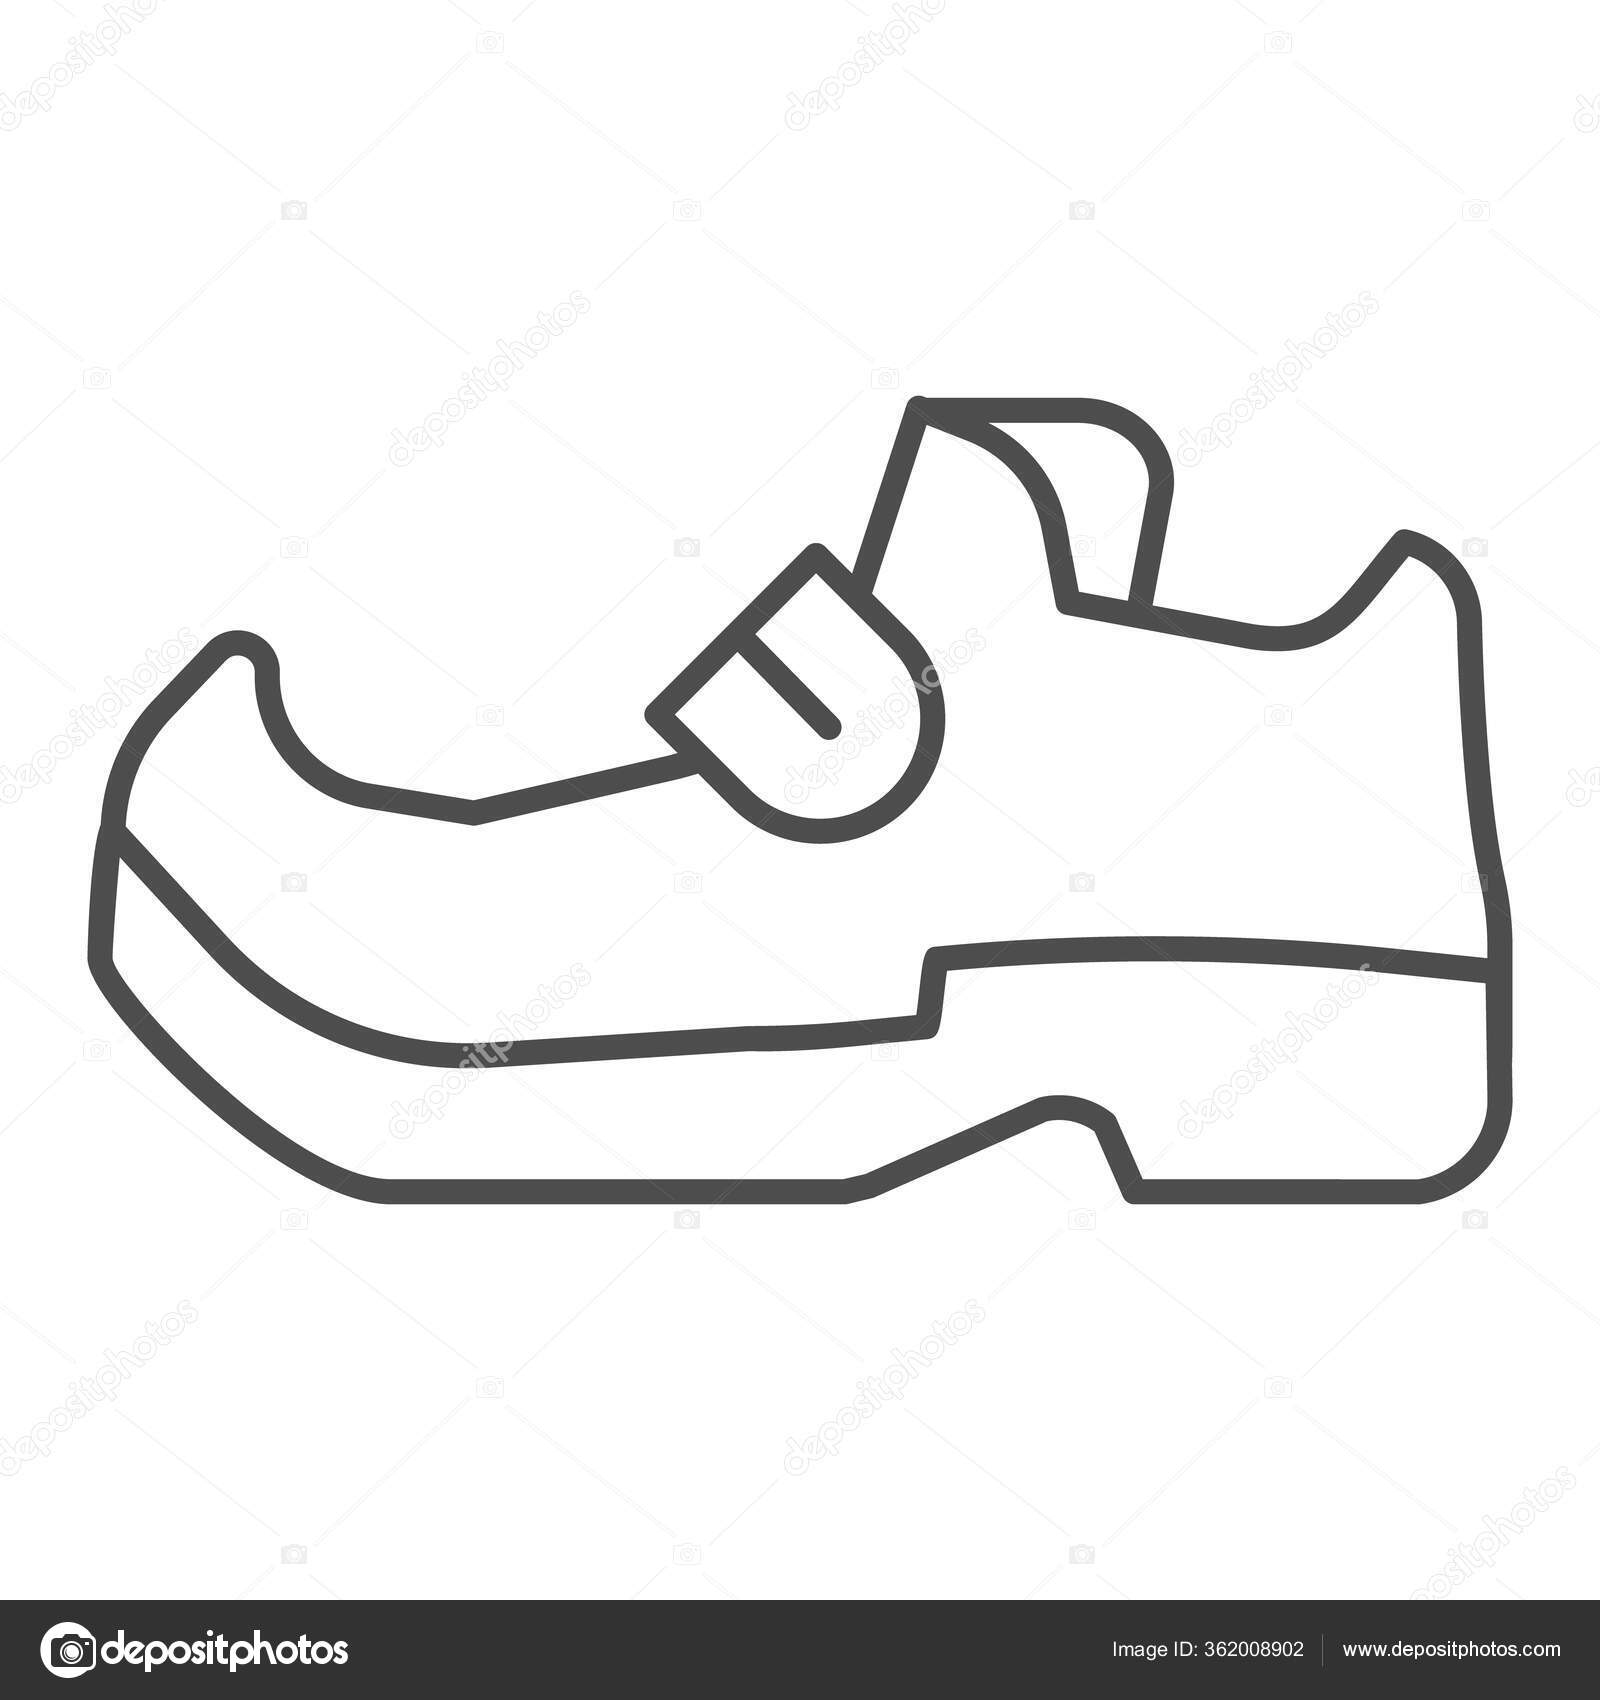 https://st3.depositphotos.com/1393072/36200/v/1600/depositphotos_362008902-stock-illustration-leprechaun-boots-thin-line-icon.jpg